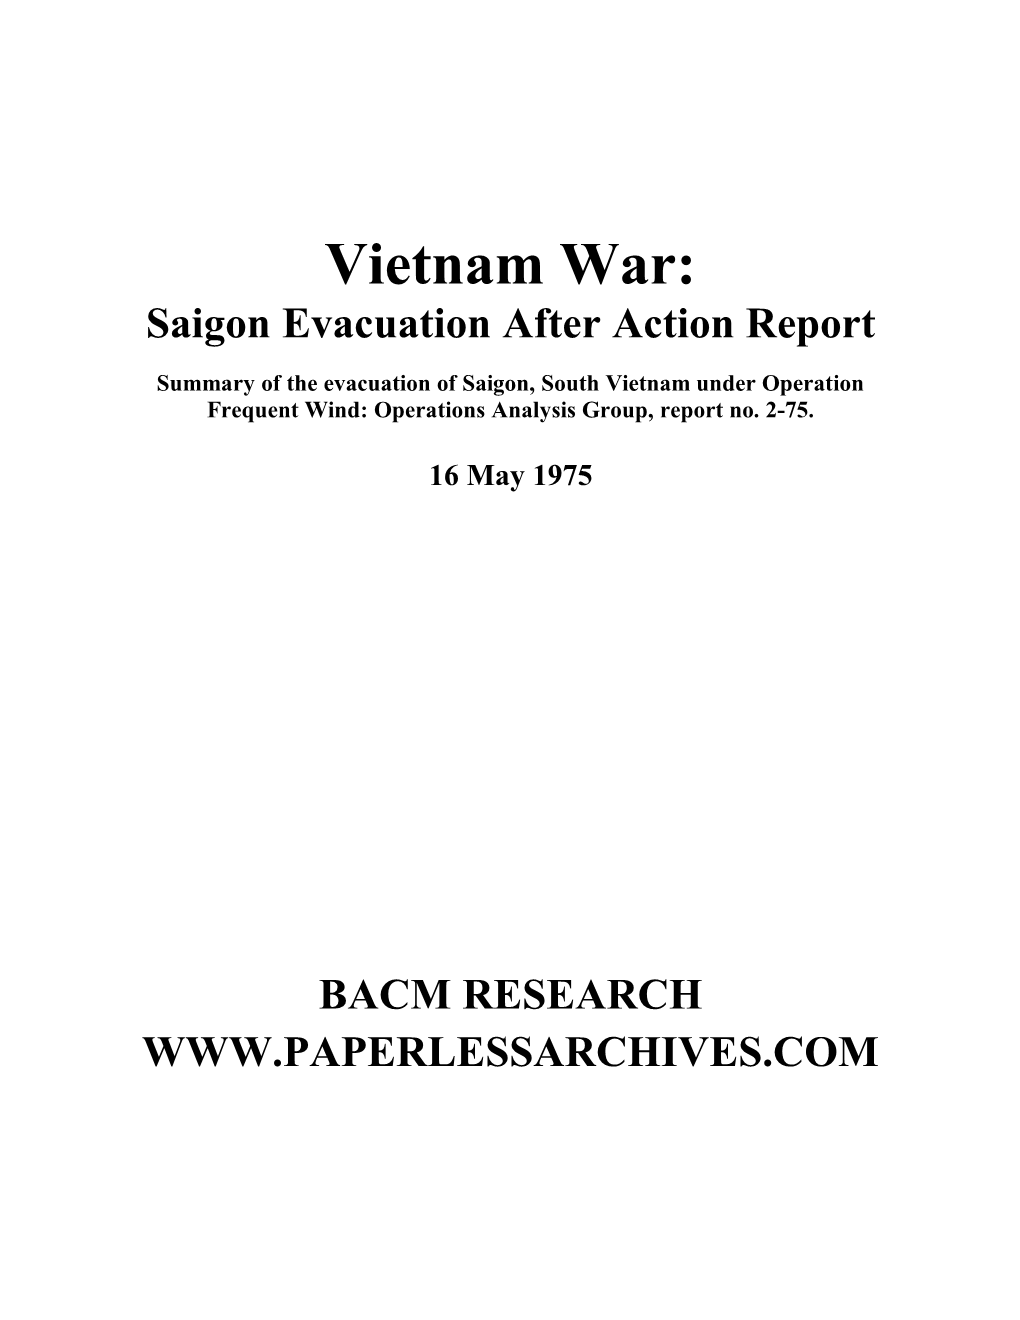 Vietnam War: Saigon Evacuation After Action Report